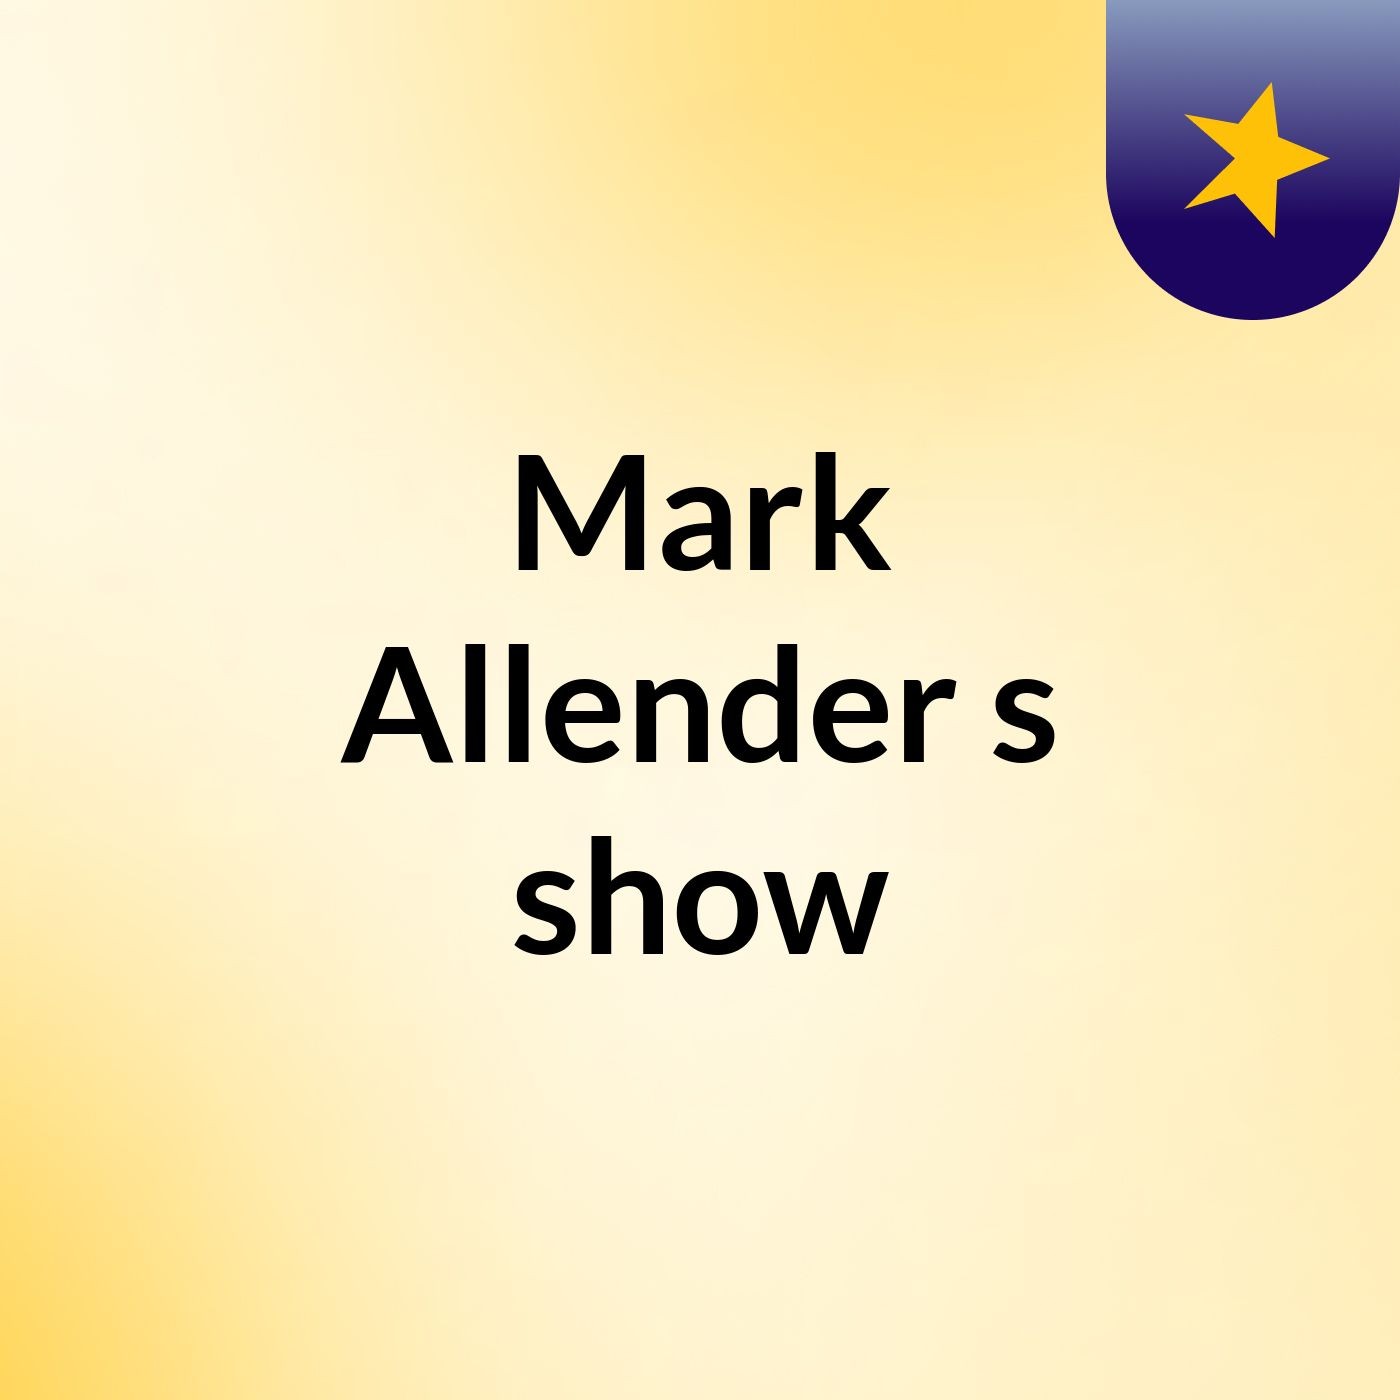 Mark Allender's show